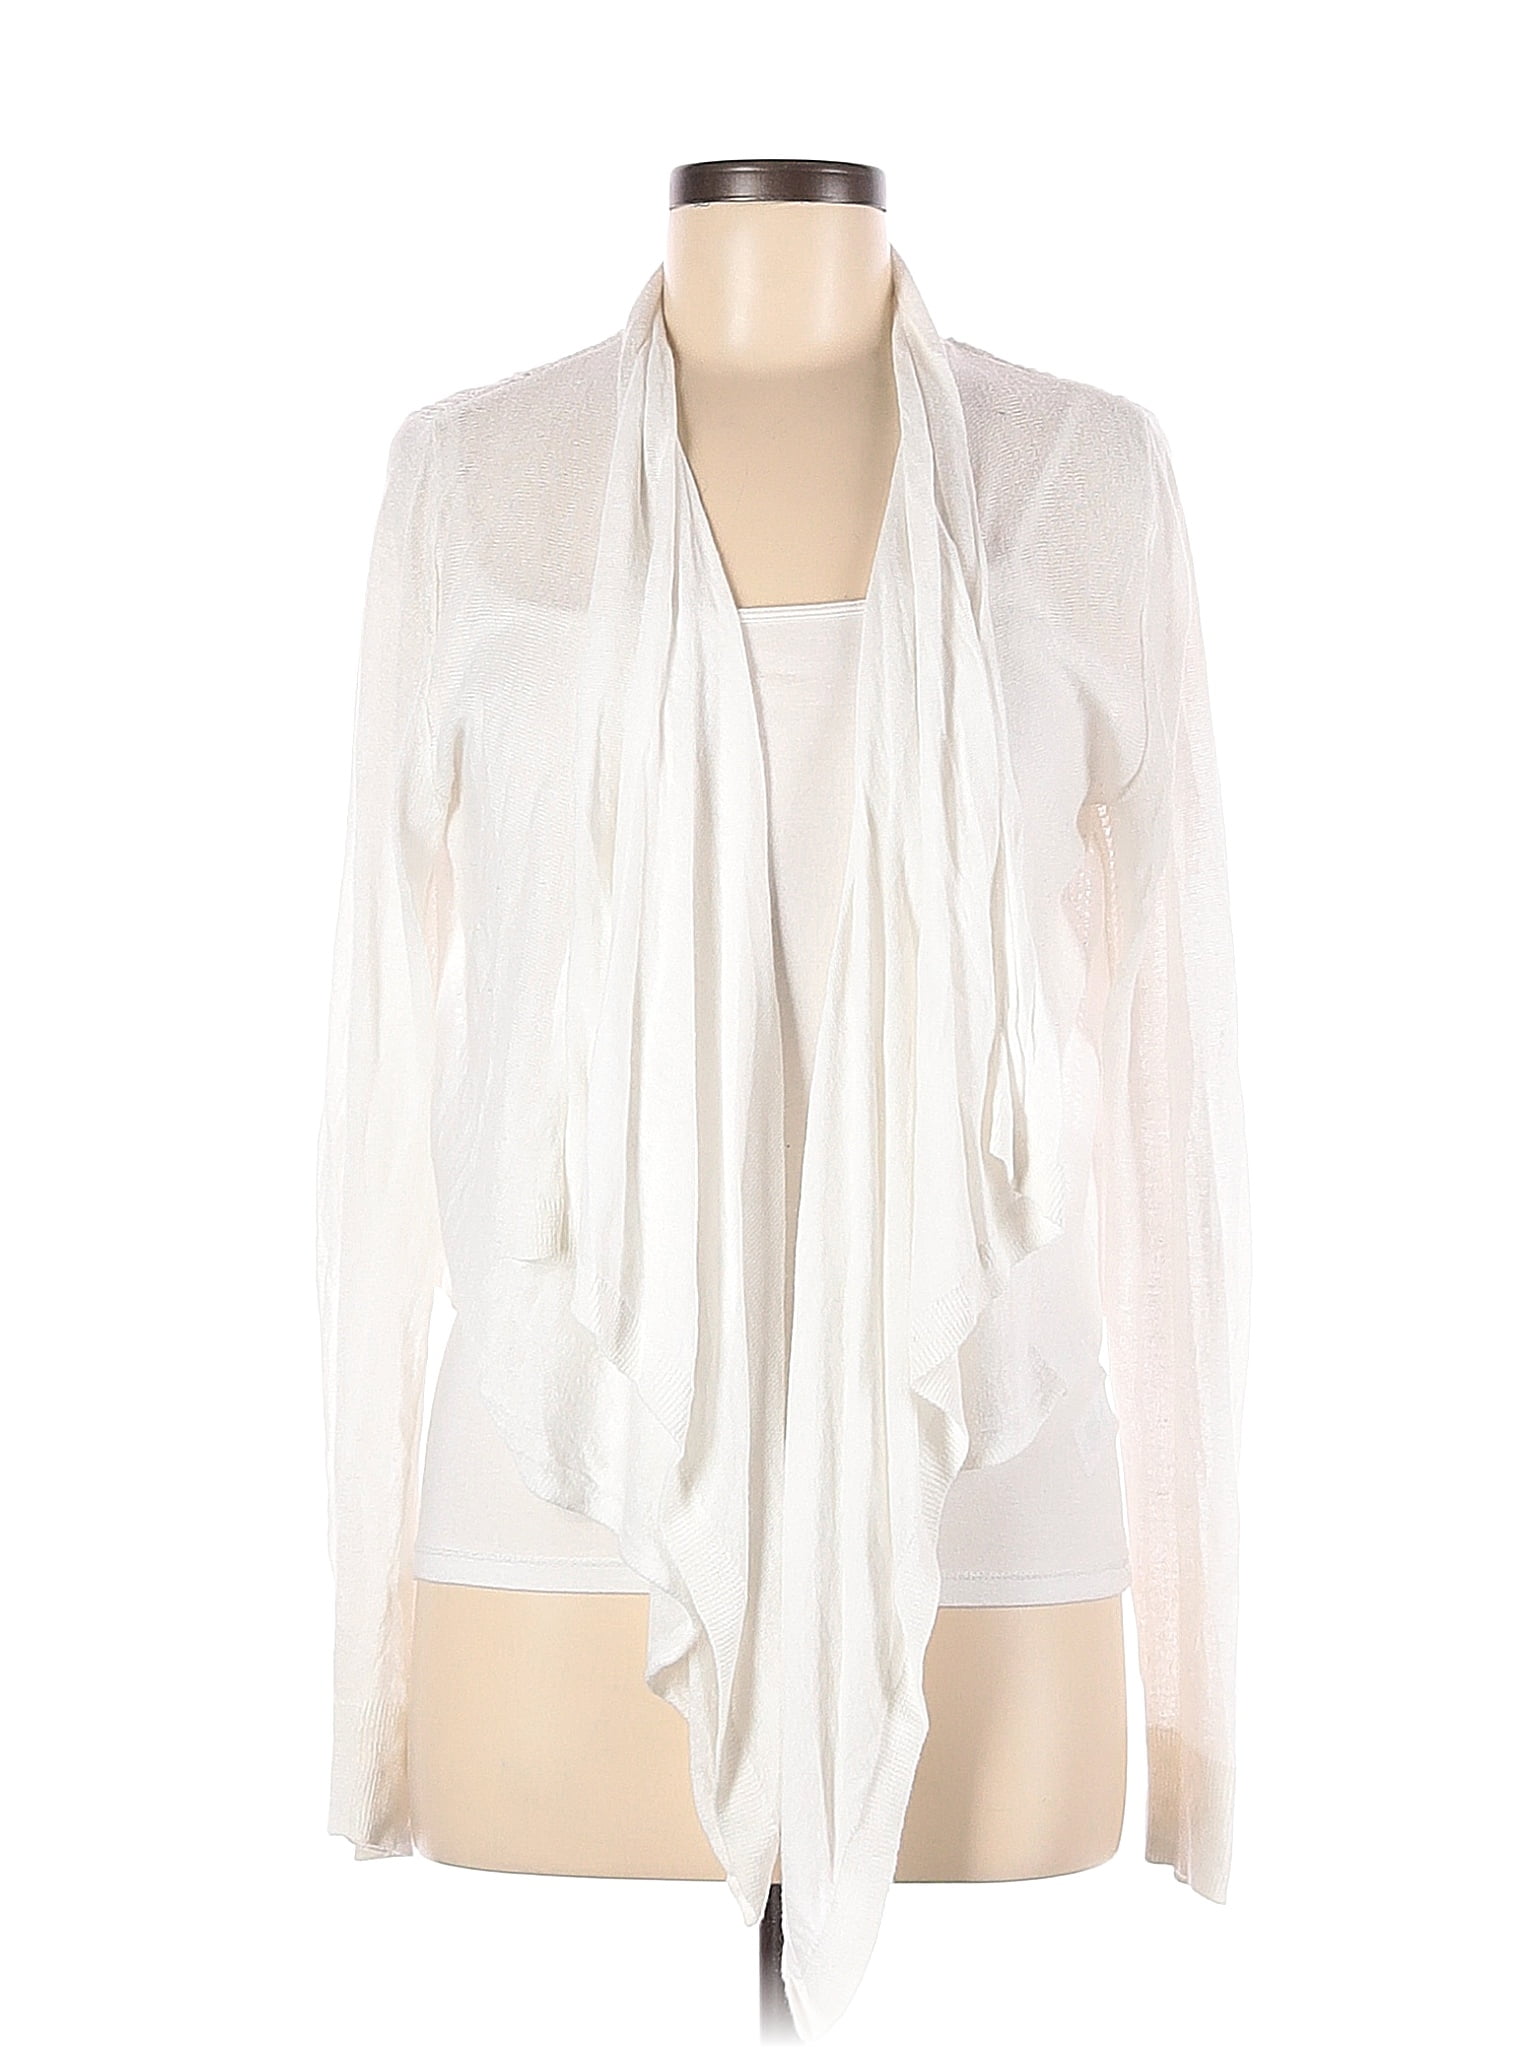 Elle Color Block Solid White Ivory Cardigan Size M - 53% off | thredUP